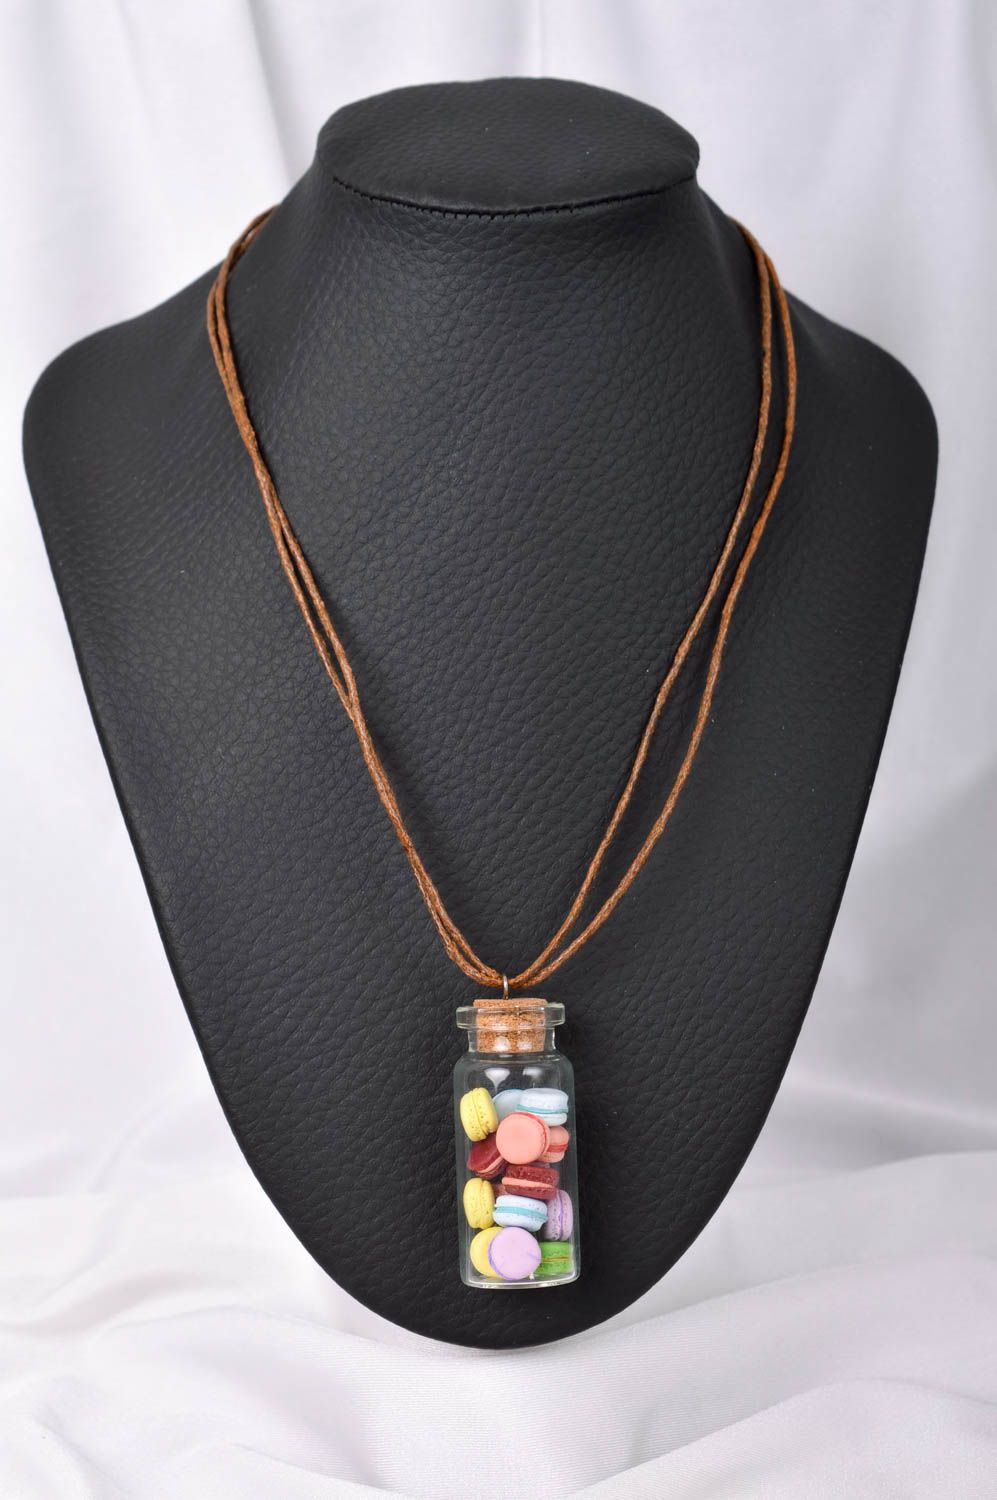 Handmade pendant unusual pendant designer accessory gift ideas clay jewelry photo 1